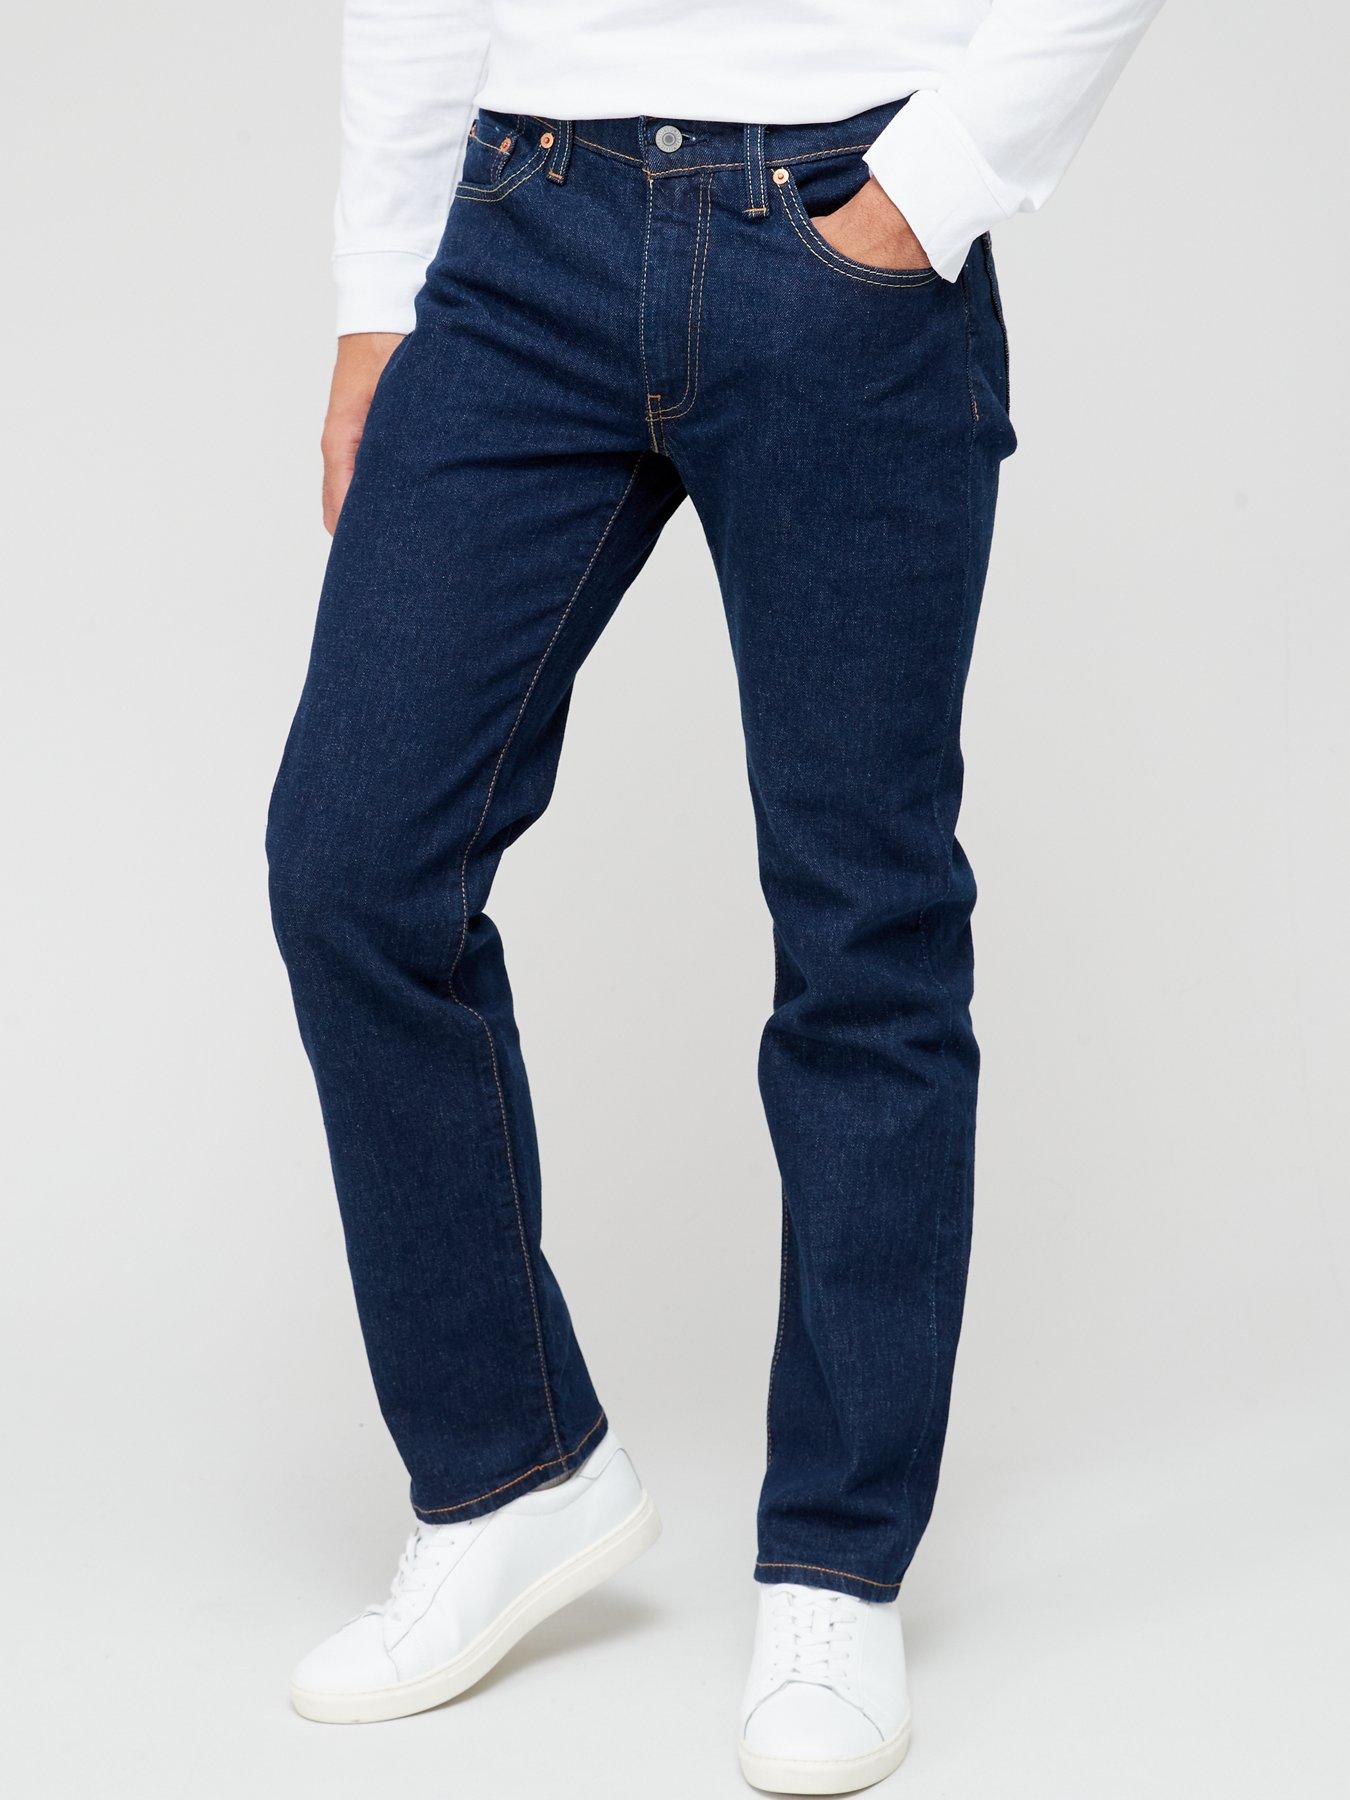 Men's Levi's 414 jeans dark wash size 30 blue